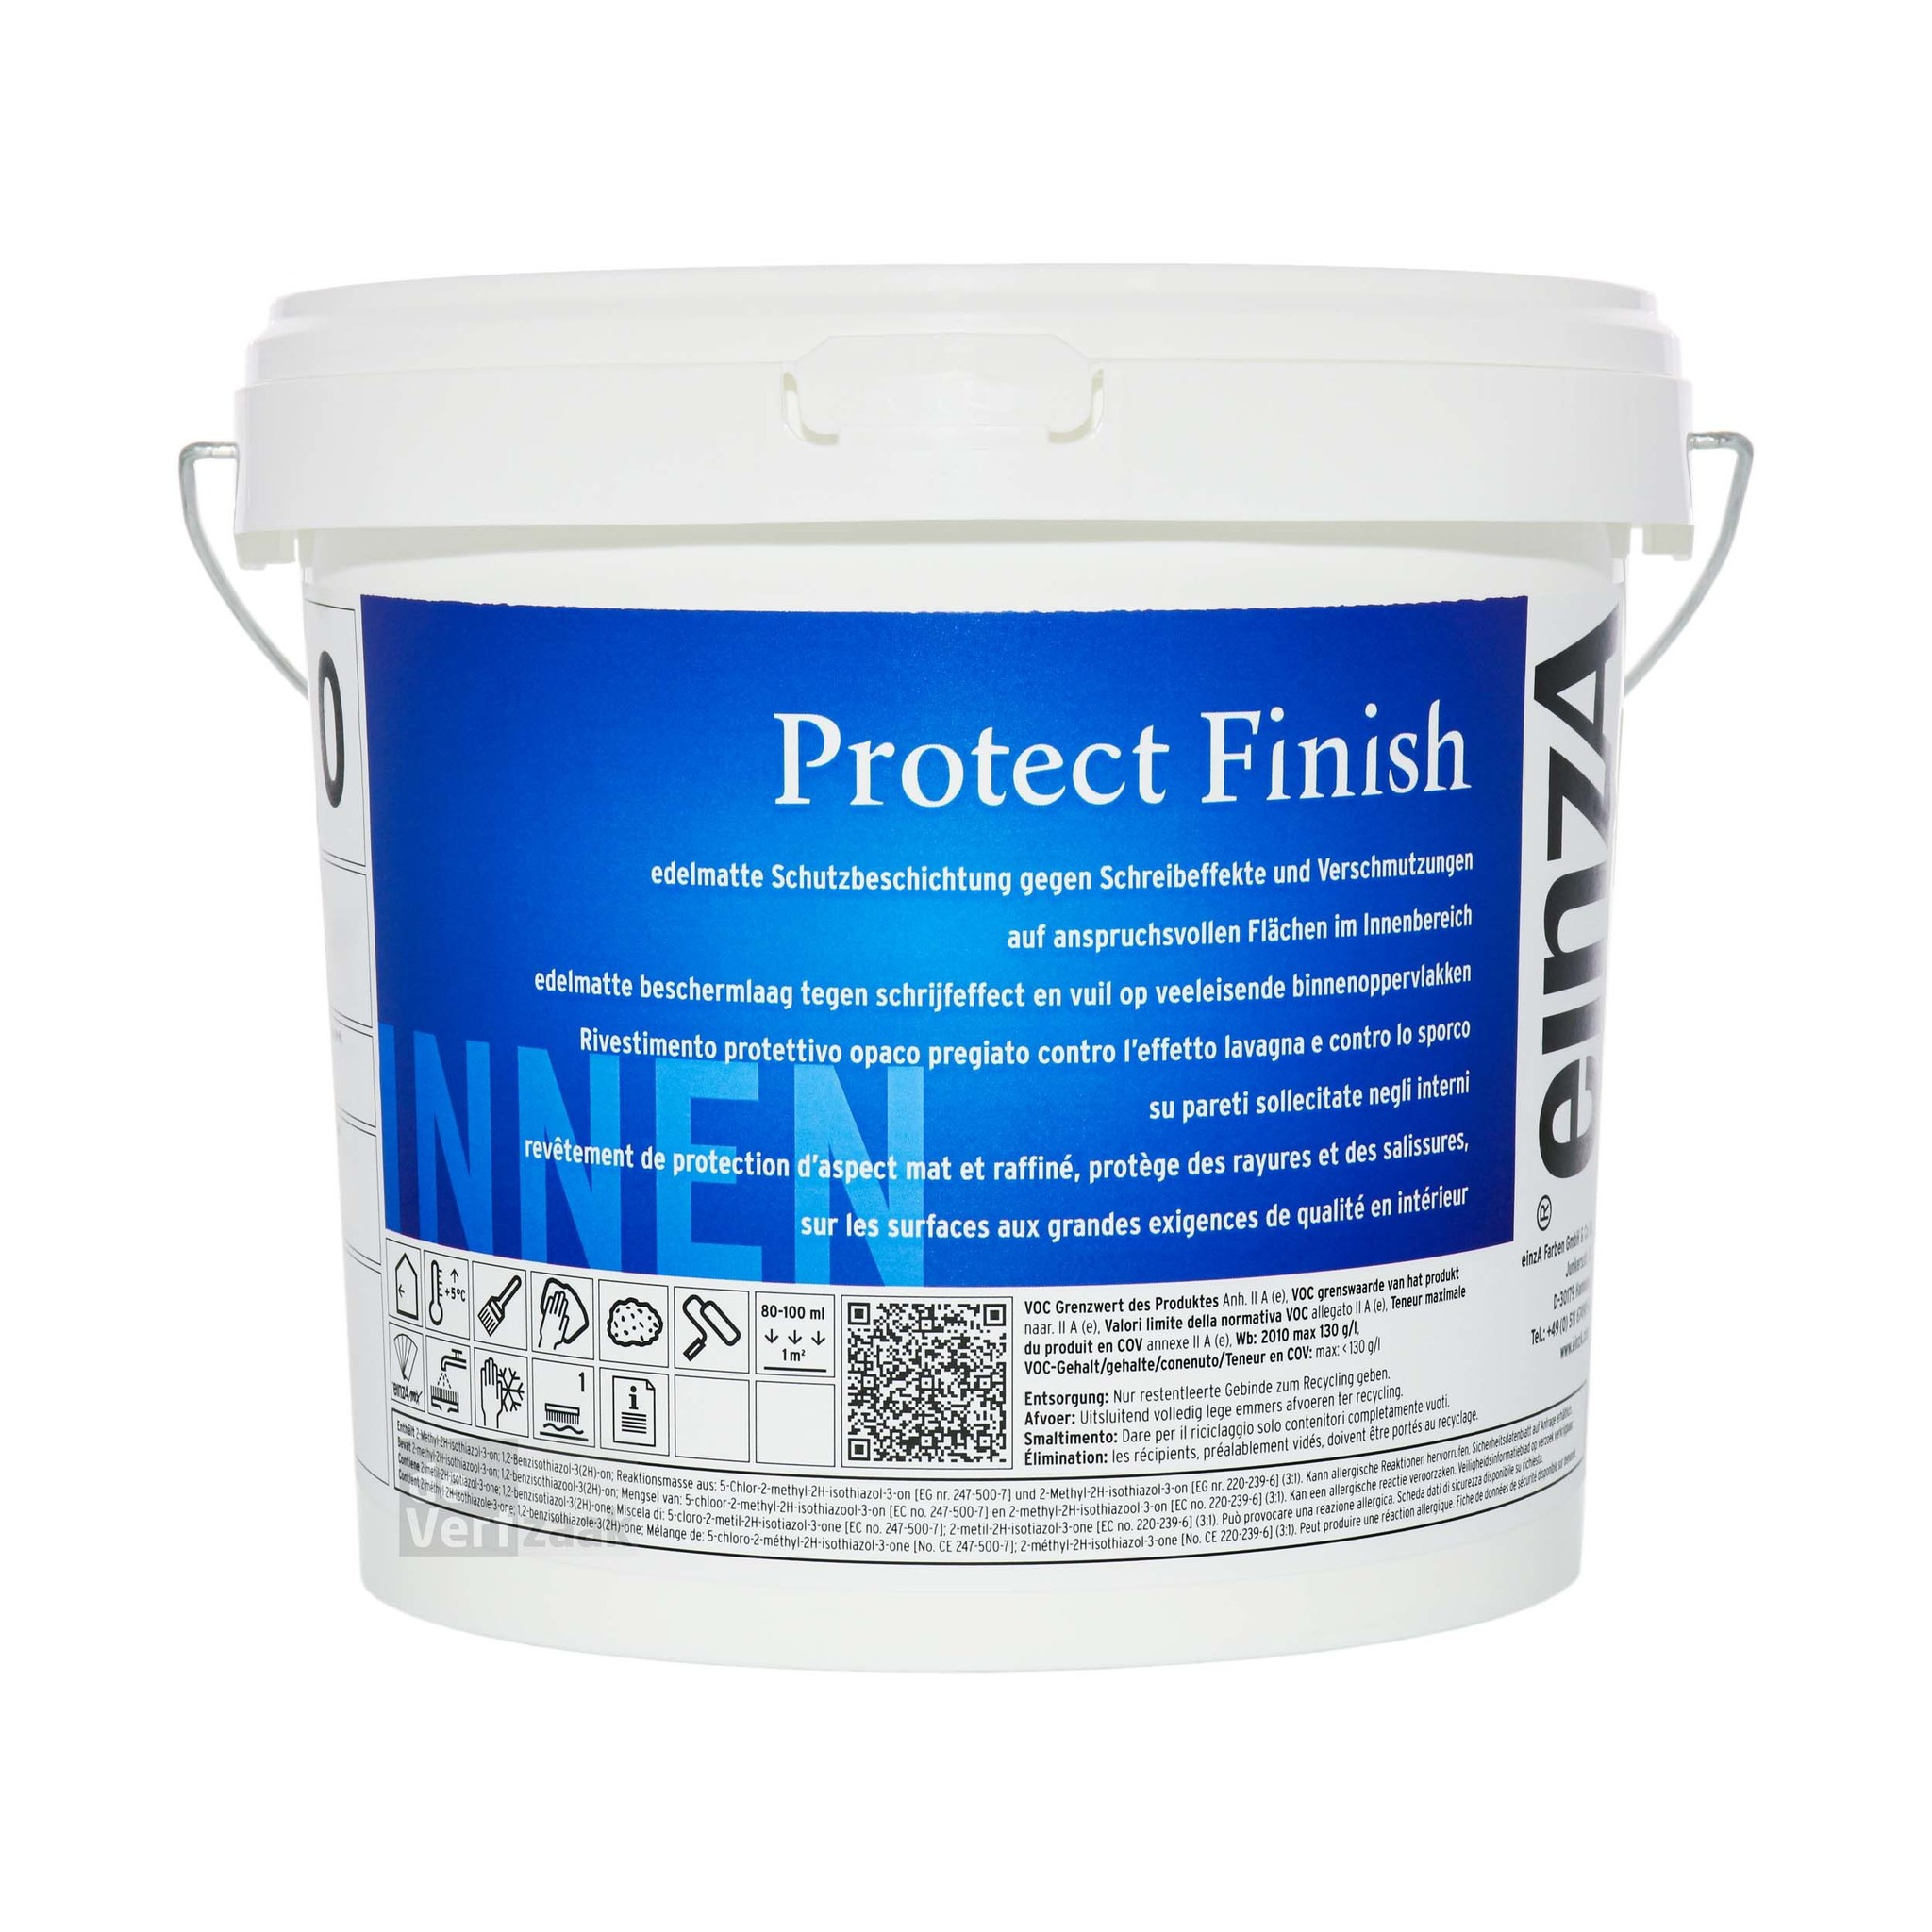 EinzA Protect Finish - 2 liter